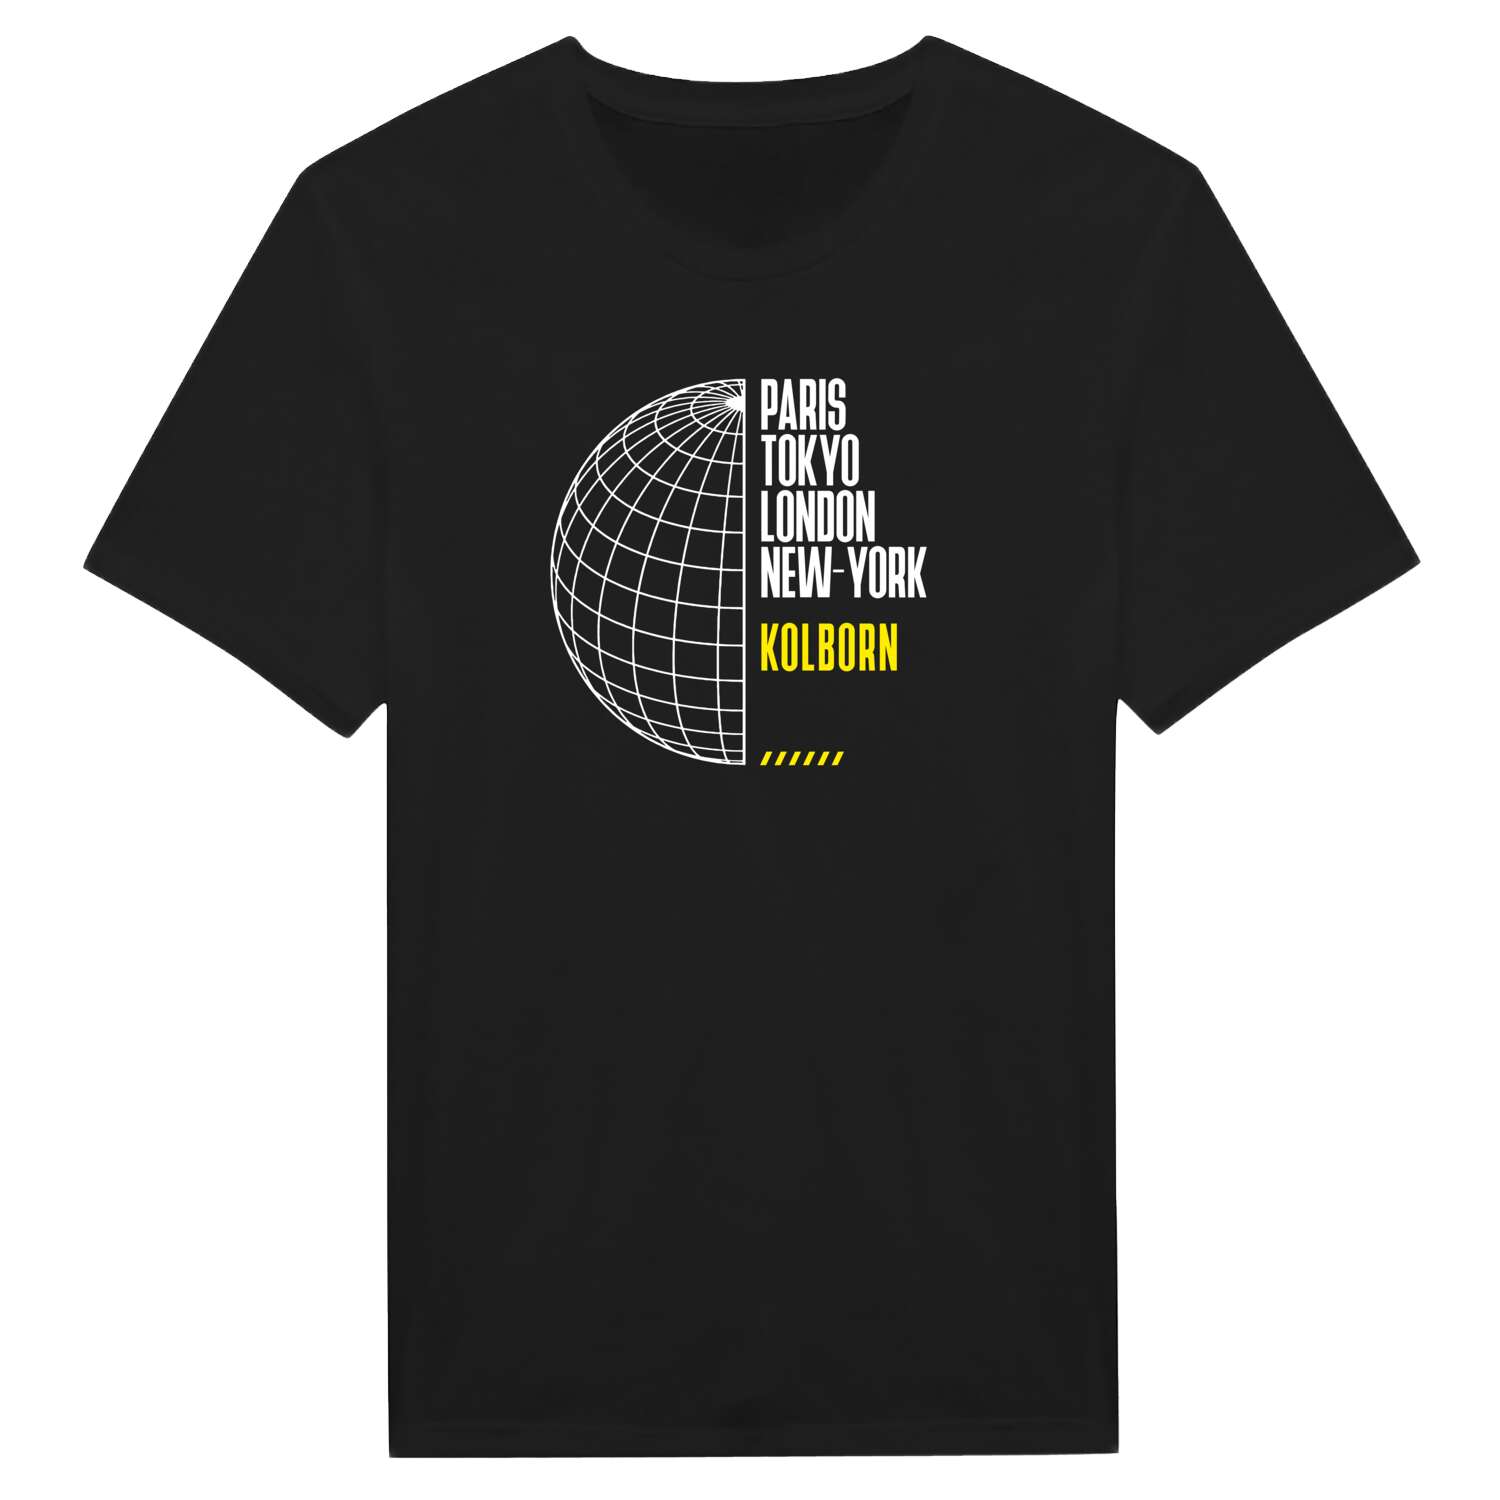 Kolborn T-Shirt »Paris Tokyo London«